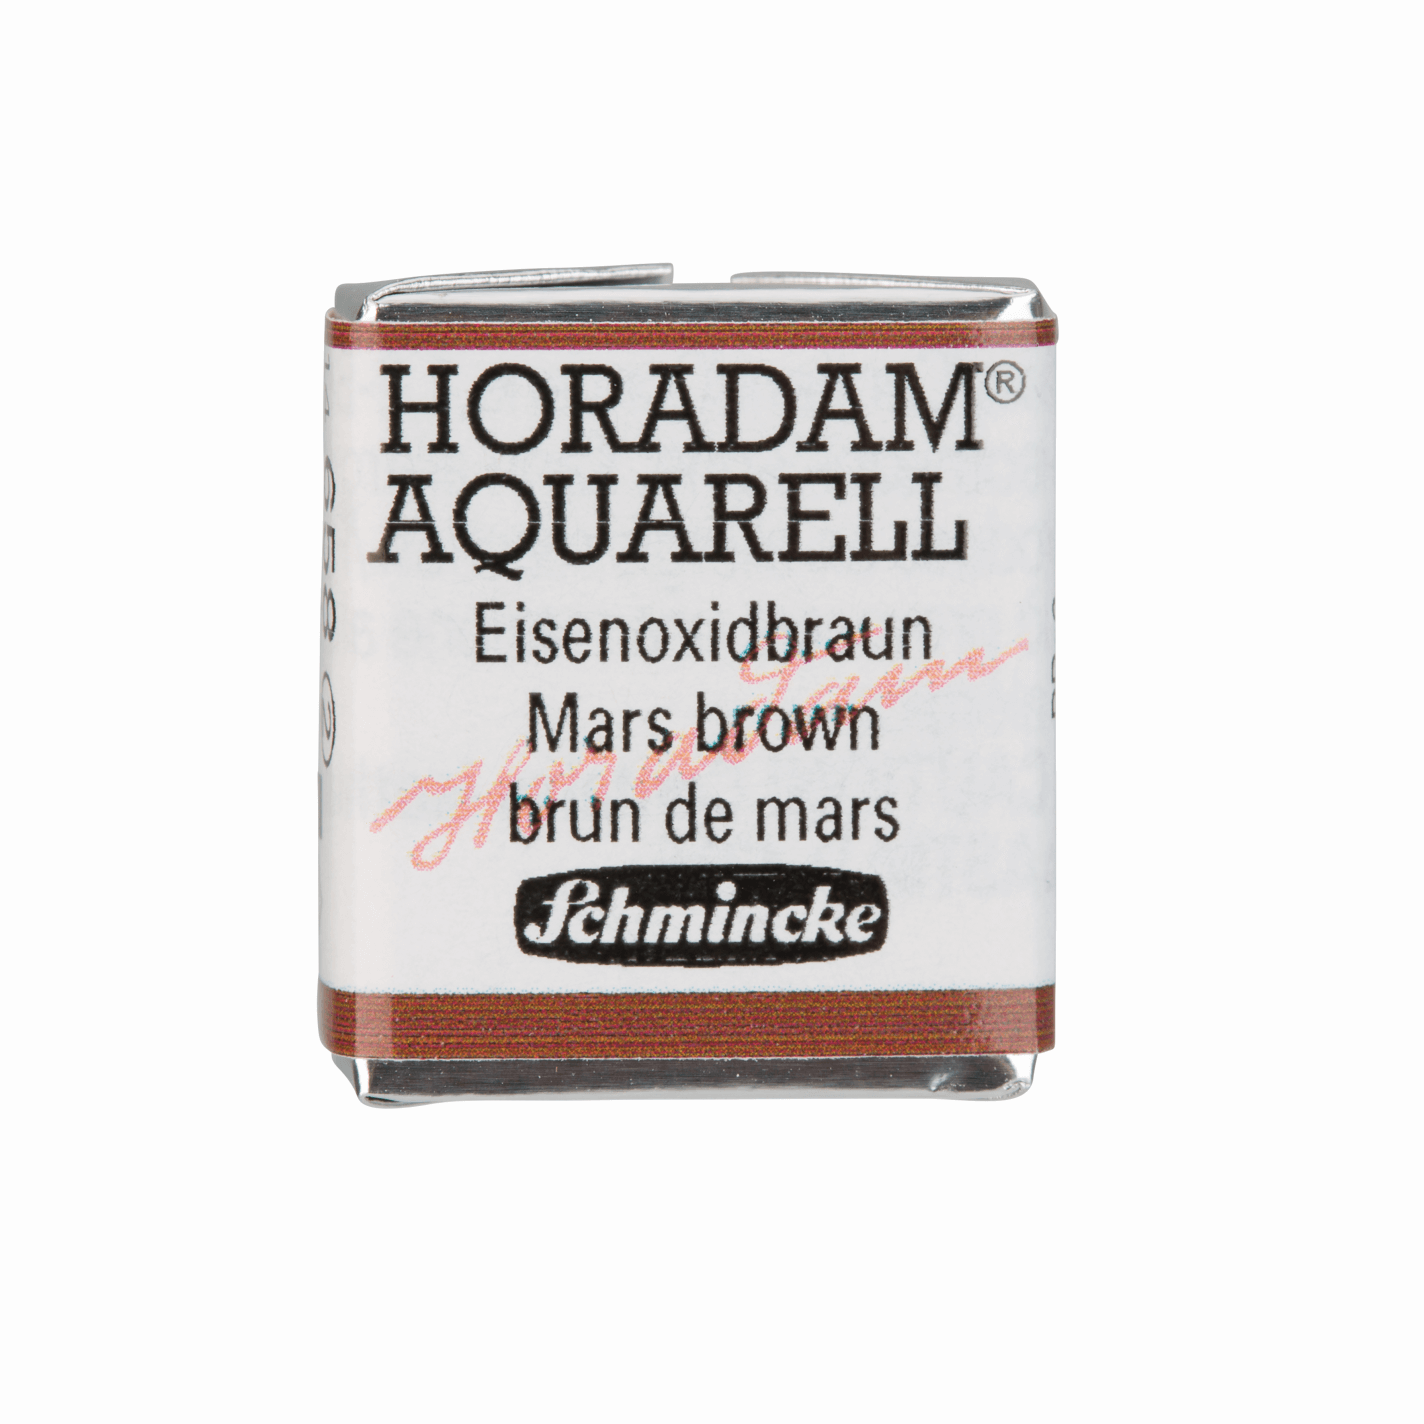 Schmincke Horadam Aquarell pans 1/2 pan Mars Brown